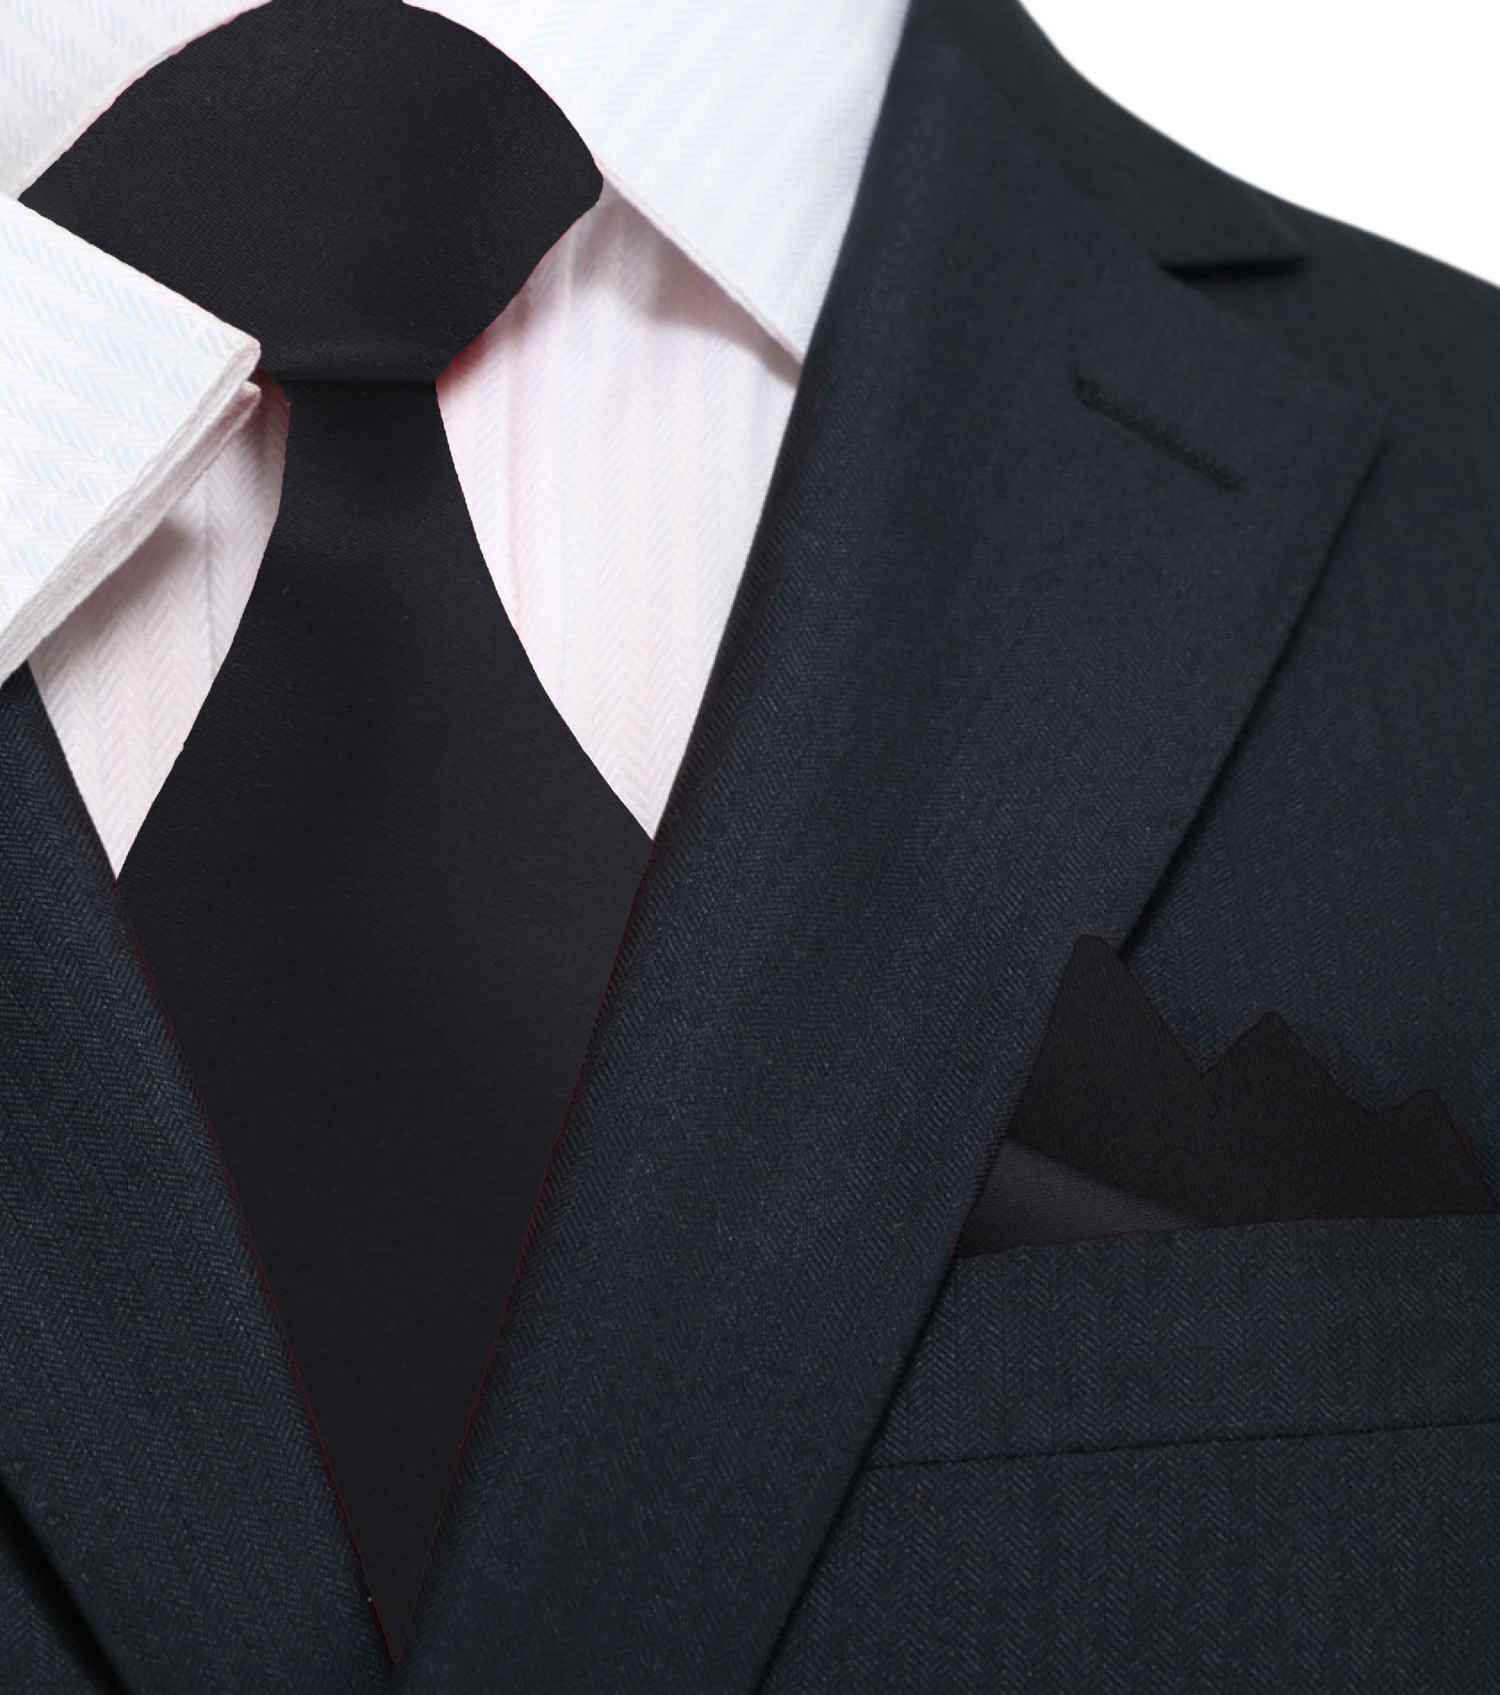 Black Necktie with Solid Black Pocket Square on Black Suit